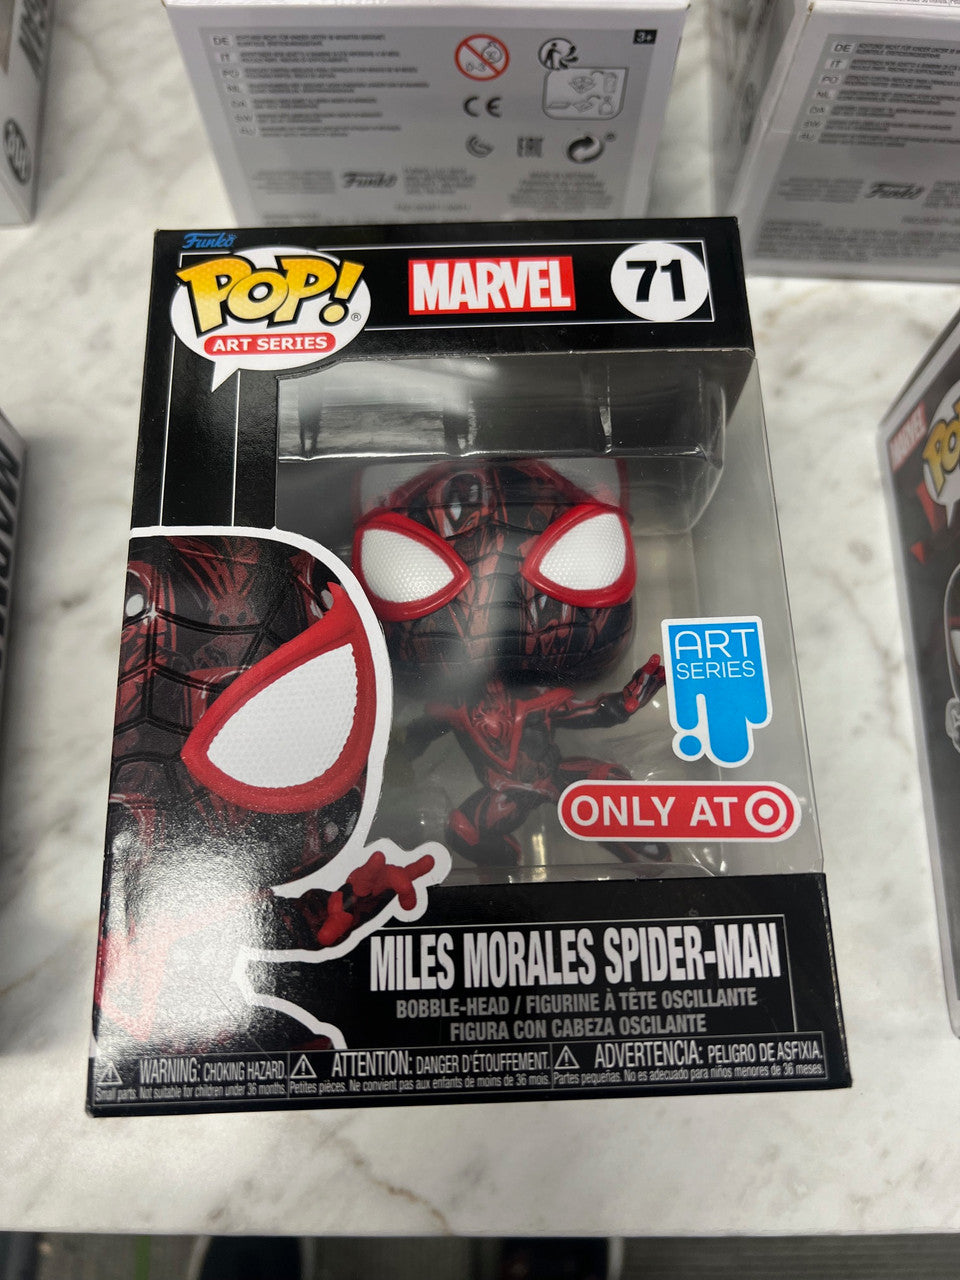 Miles Morales Spider-man Art Series Target Exclusive Funko Pop figure 71